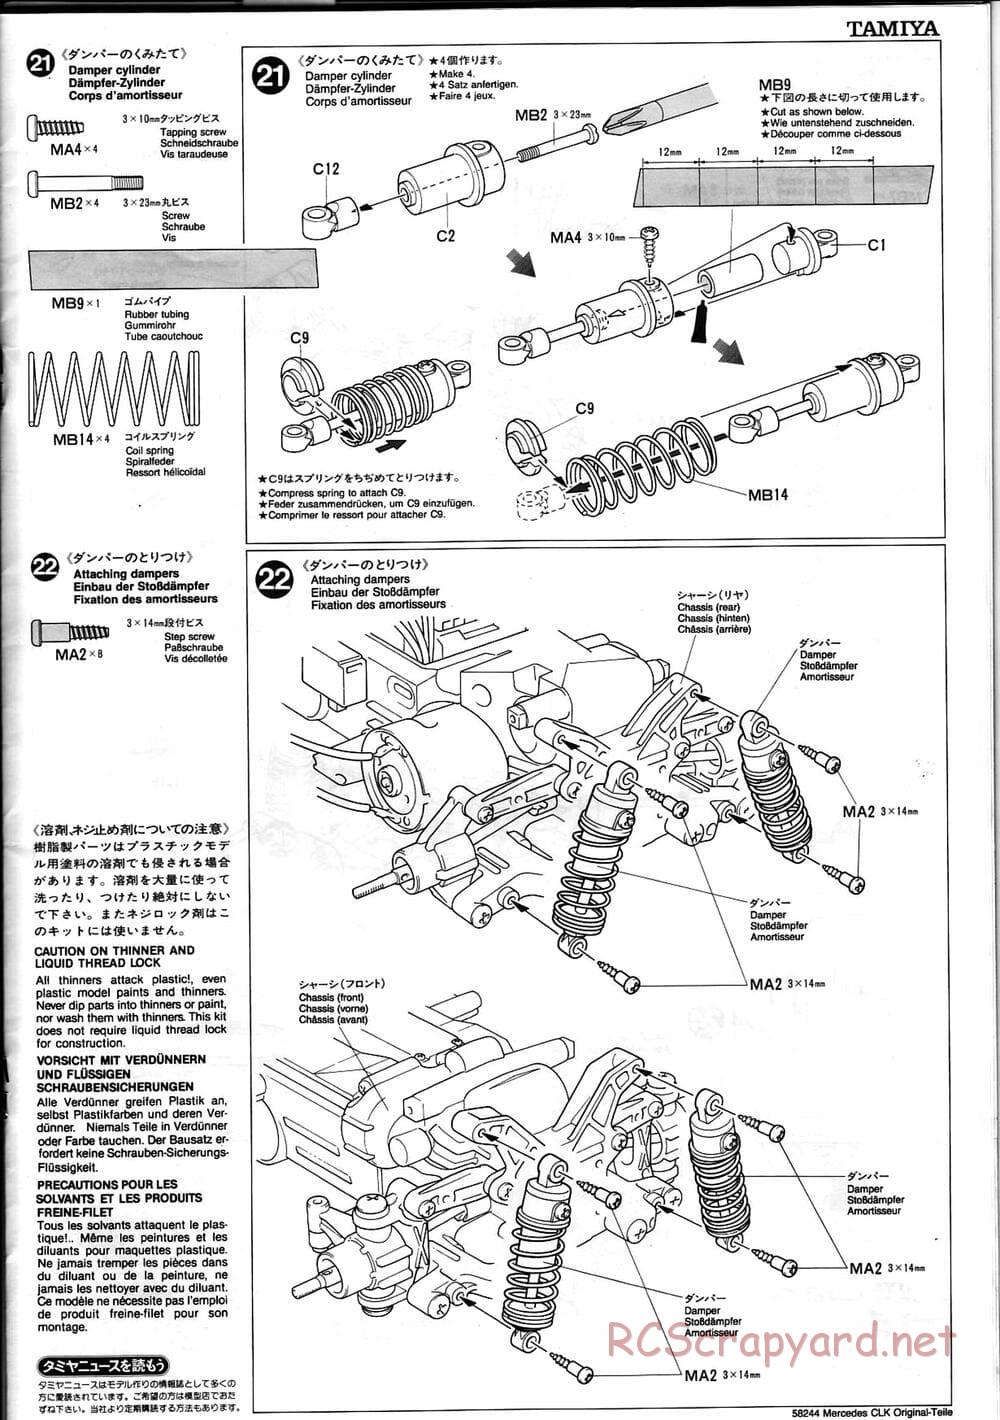 Tamiya - Mercedes CLK-GTR Original-Teile - TL-01 Chassis - Manual - Page 13